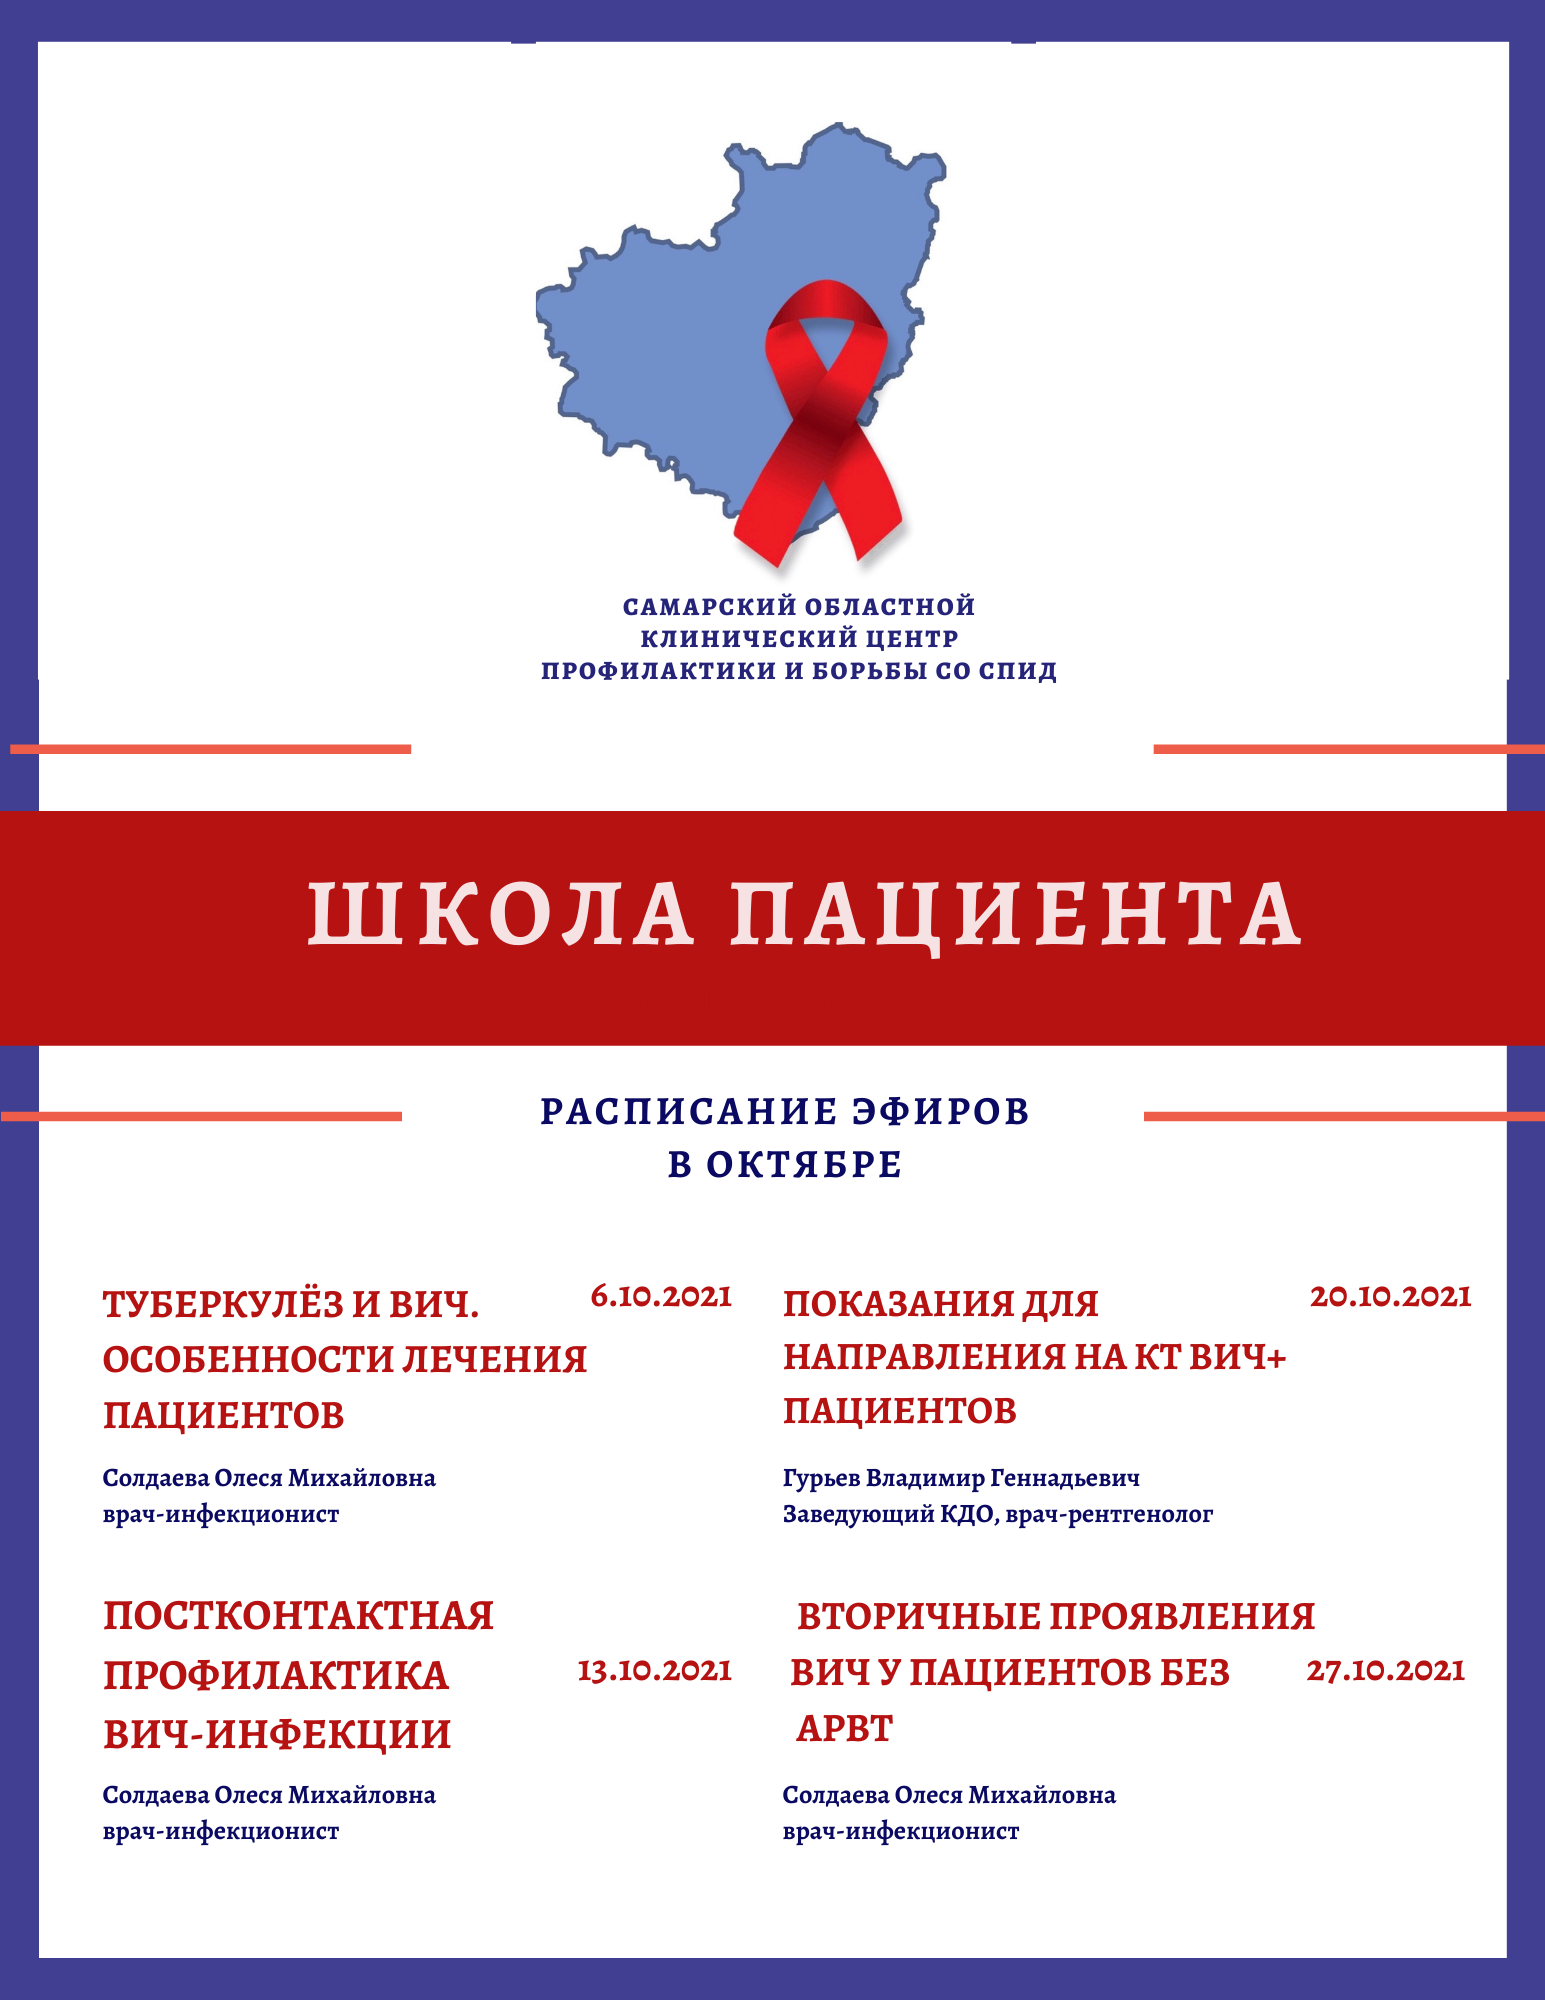 Школа пациента ВИЧ. СПИД центр расписание врачей. Расписание СПИД центра. СПИД центр расписание врачей Новосибирск.